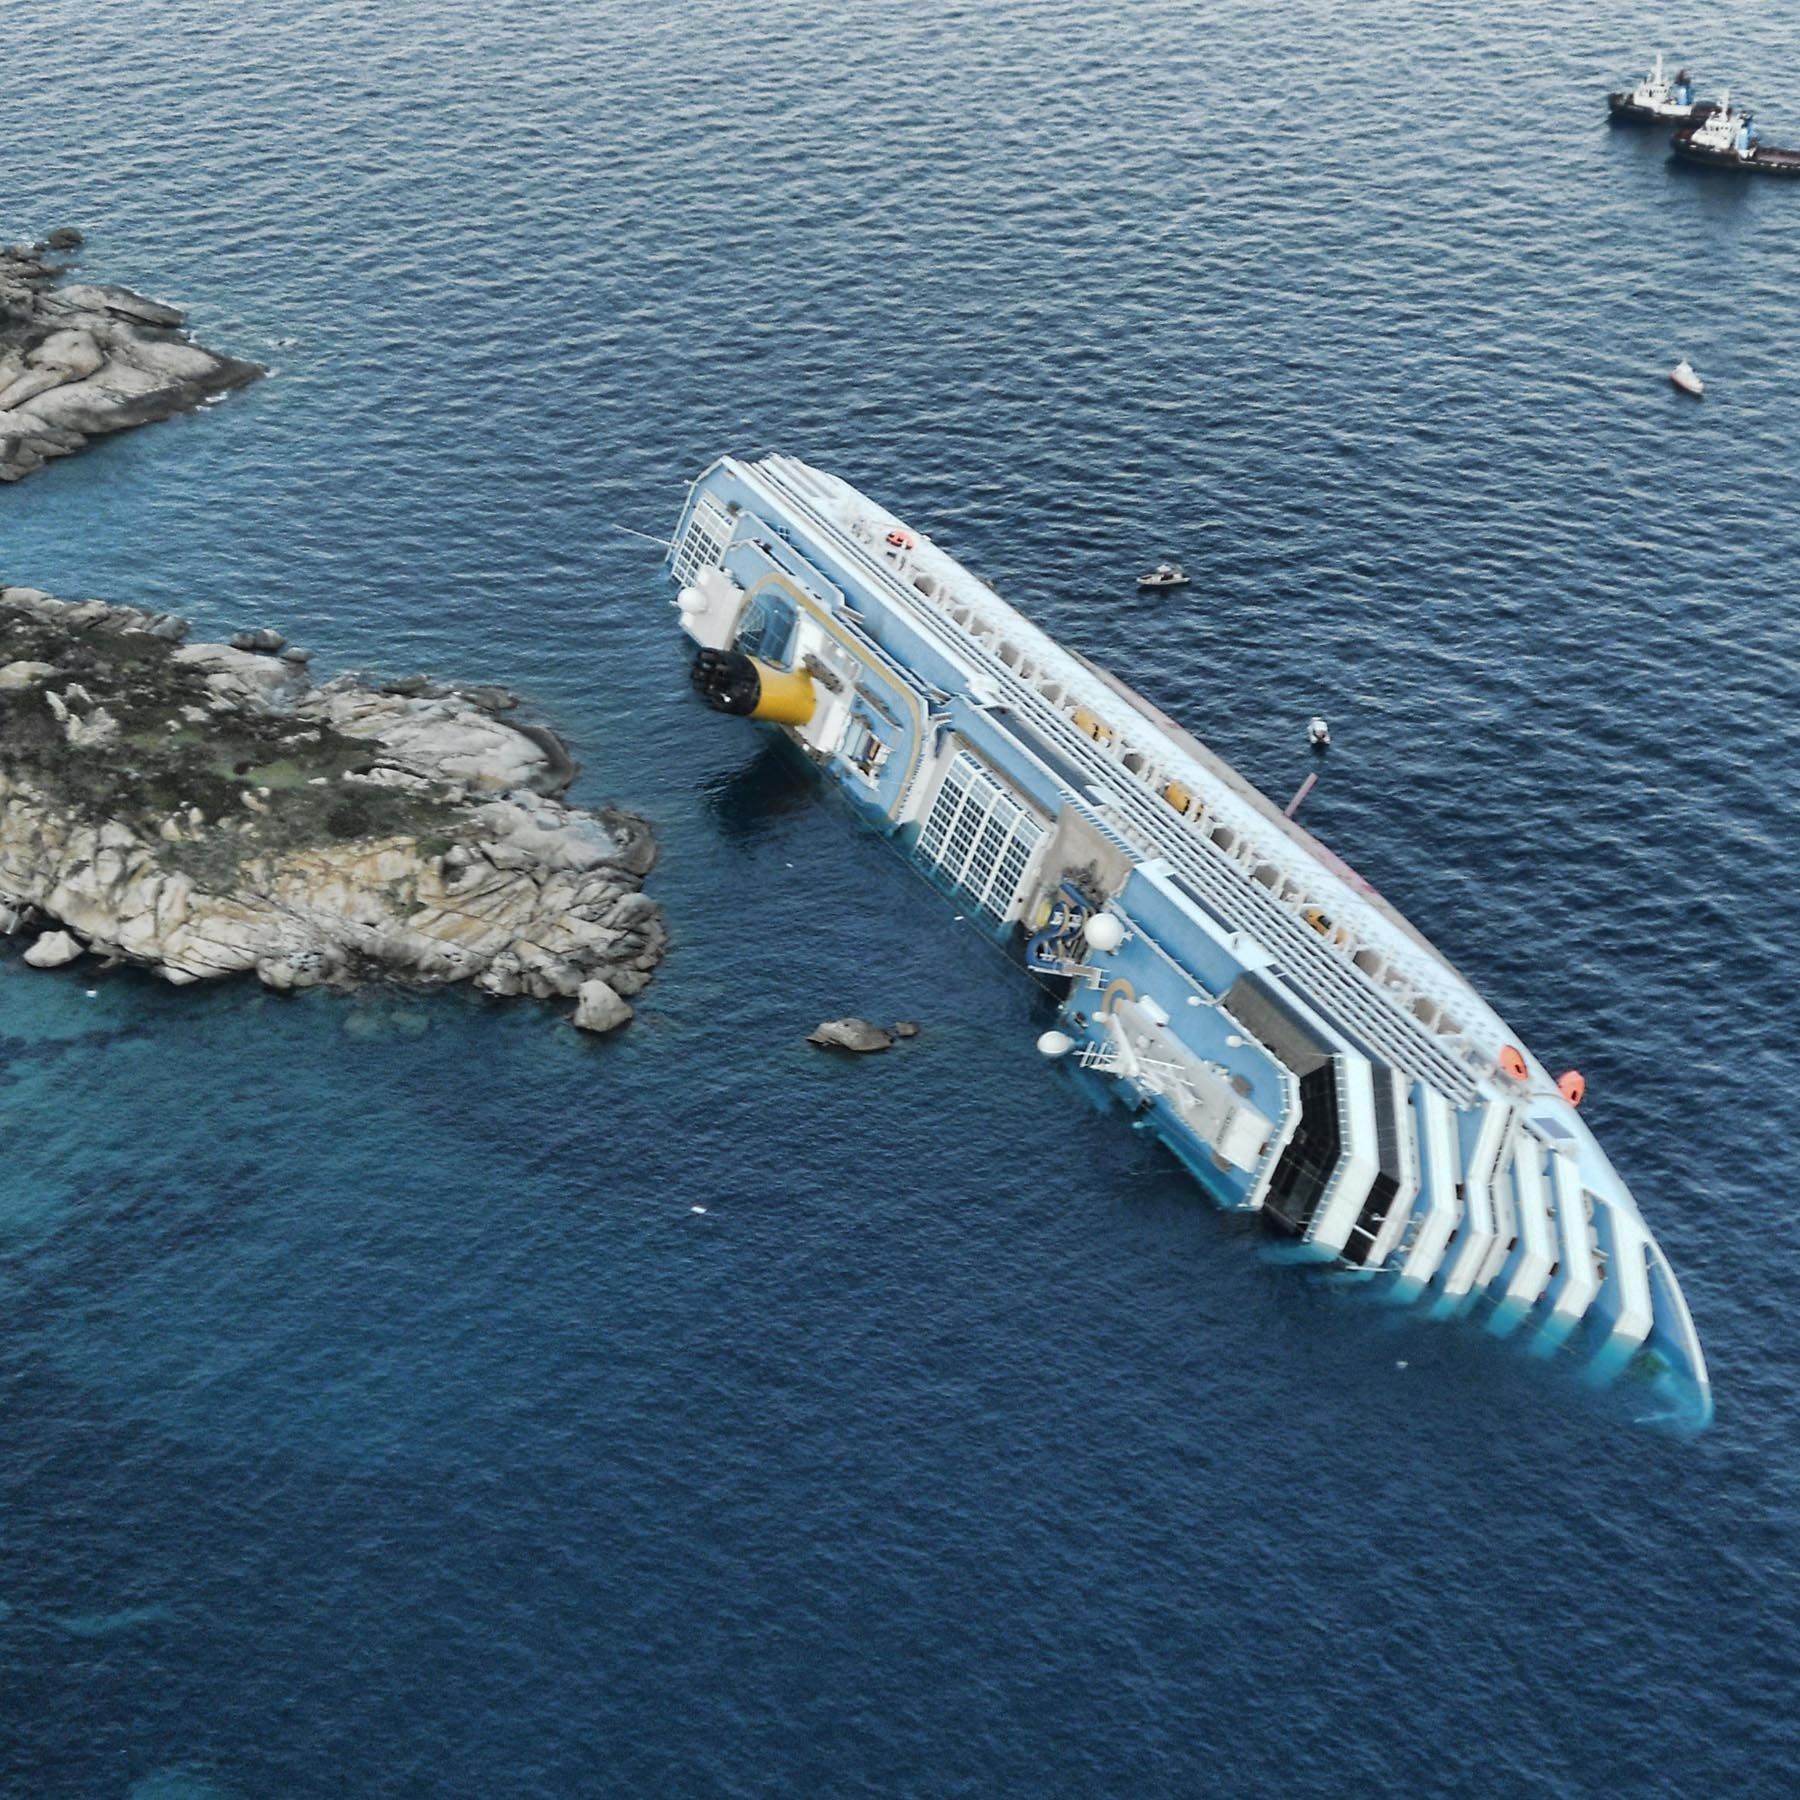 Costa Concordia Cruise Ship Disasters